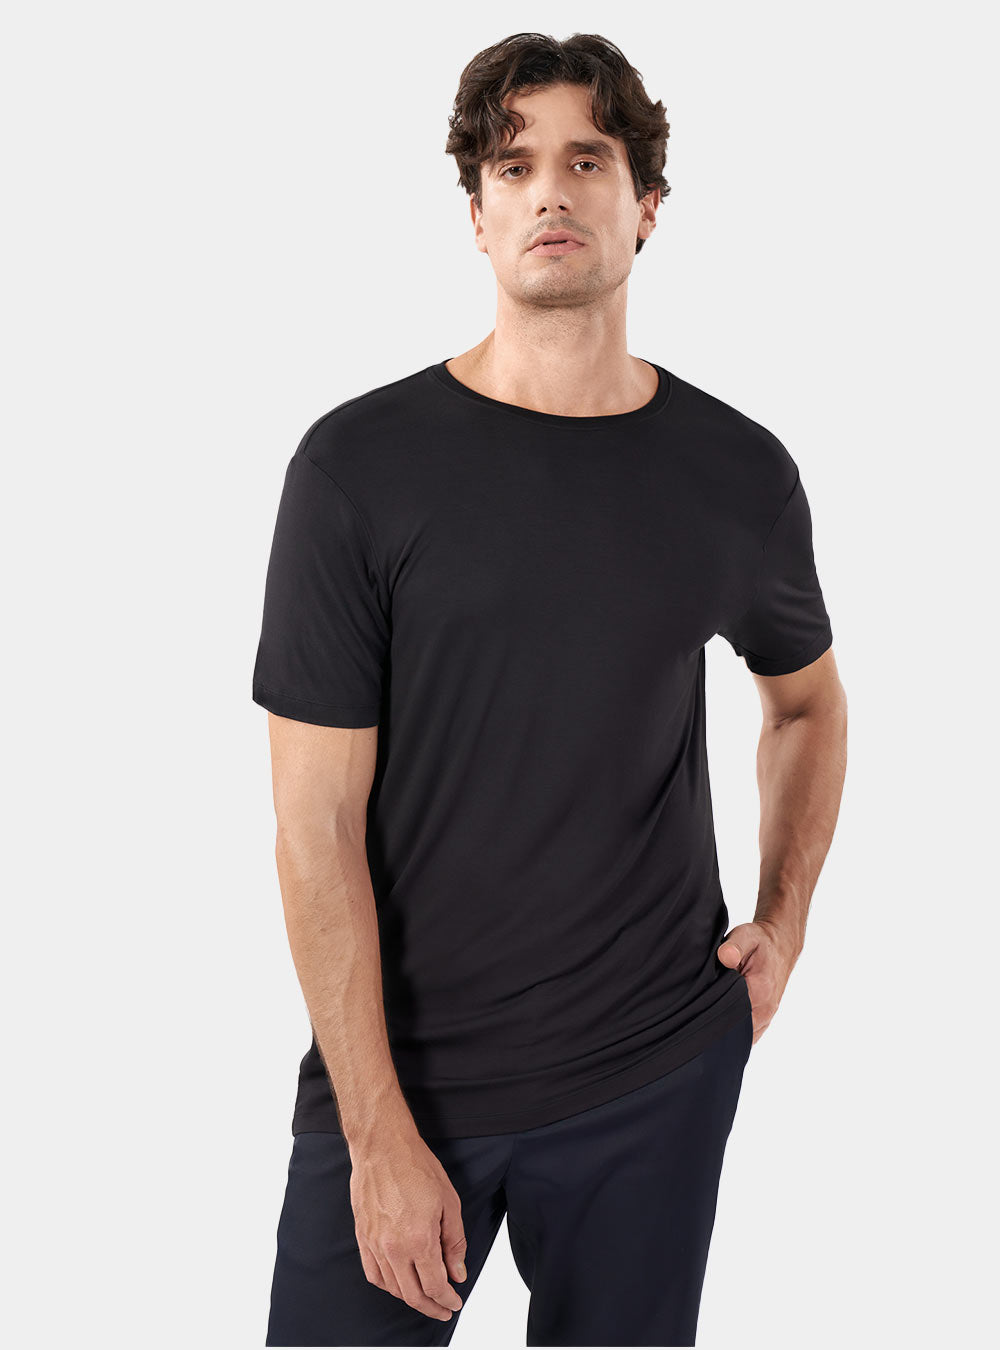 David Archy Men's Undershirt Bamboo Rayon Moisture-Wicking T-shirts Stretch Crewneck/V-Neck Tees for Men, XL / Navy Blue/Black/Burgundy